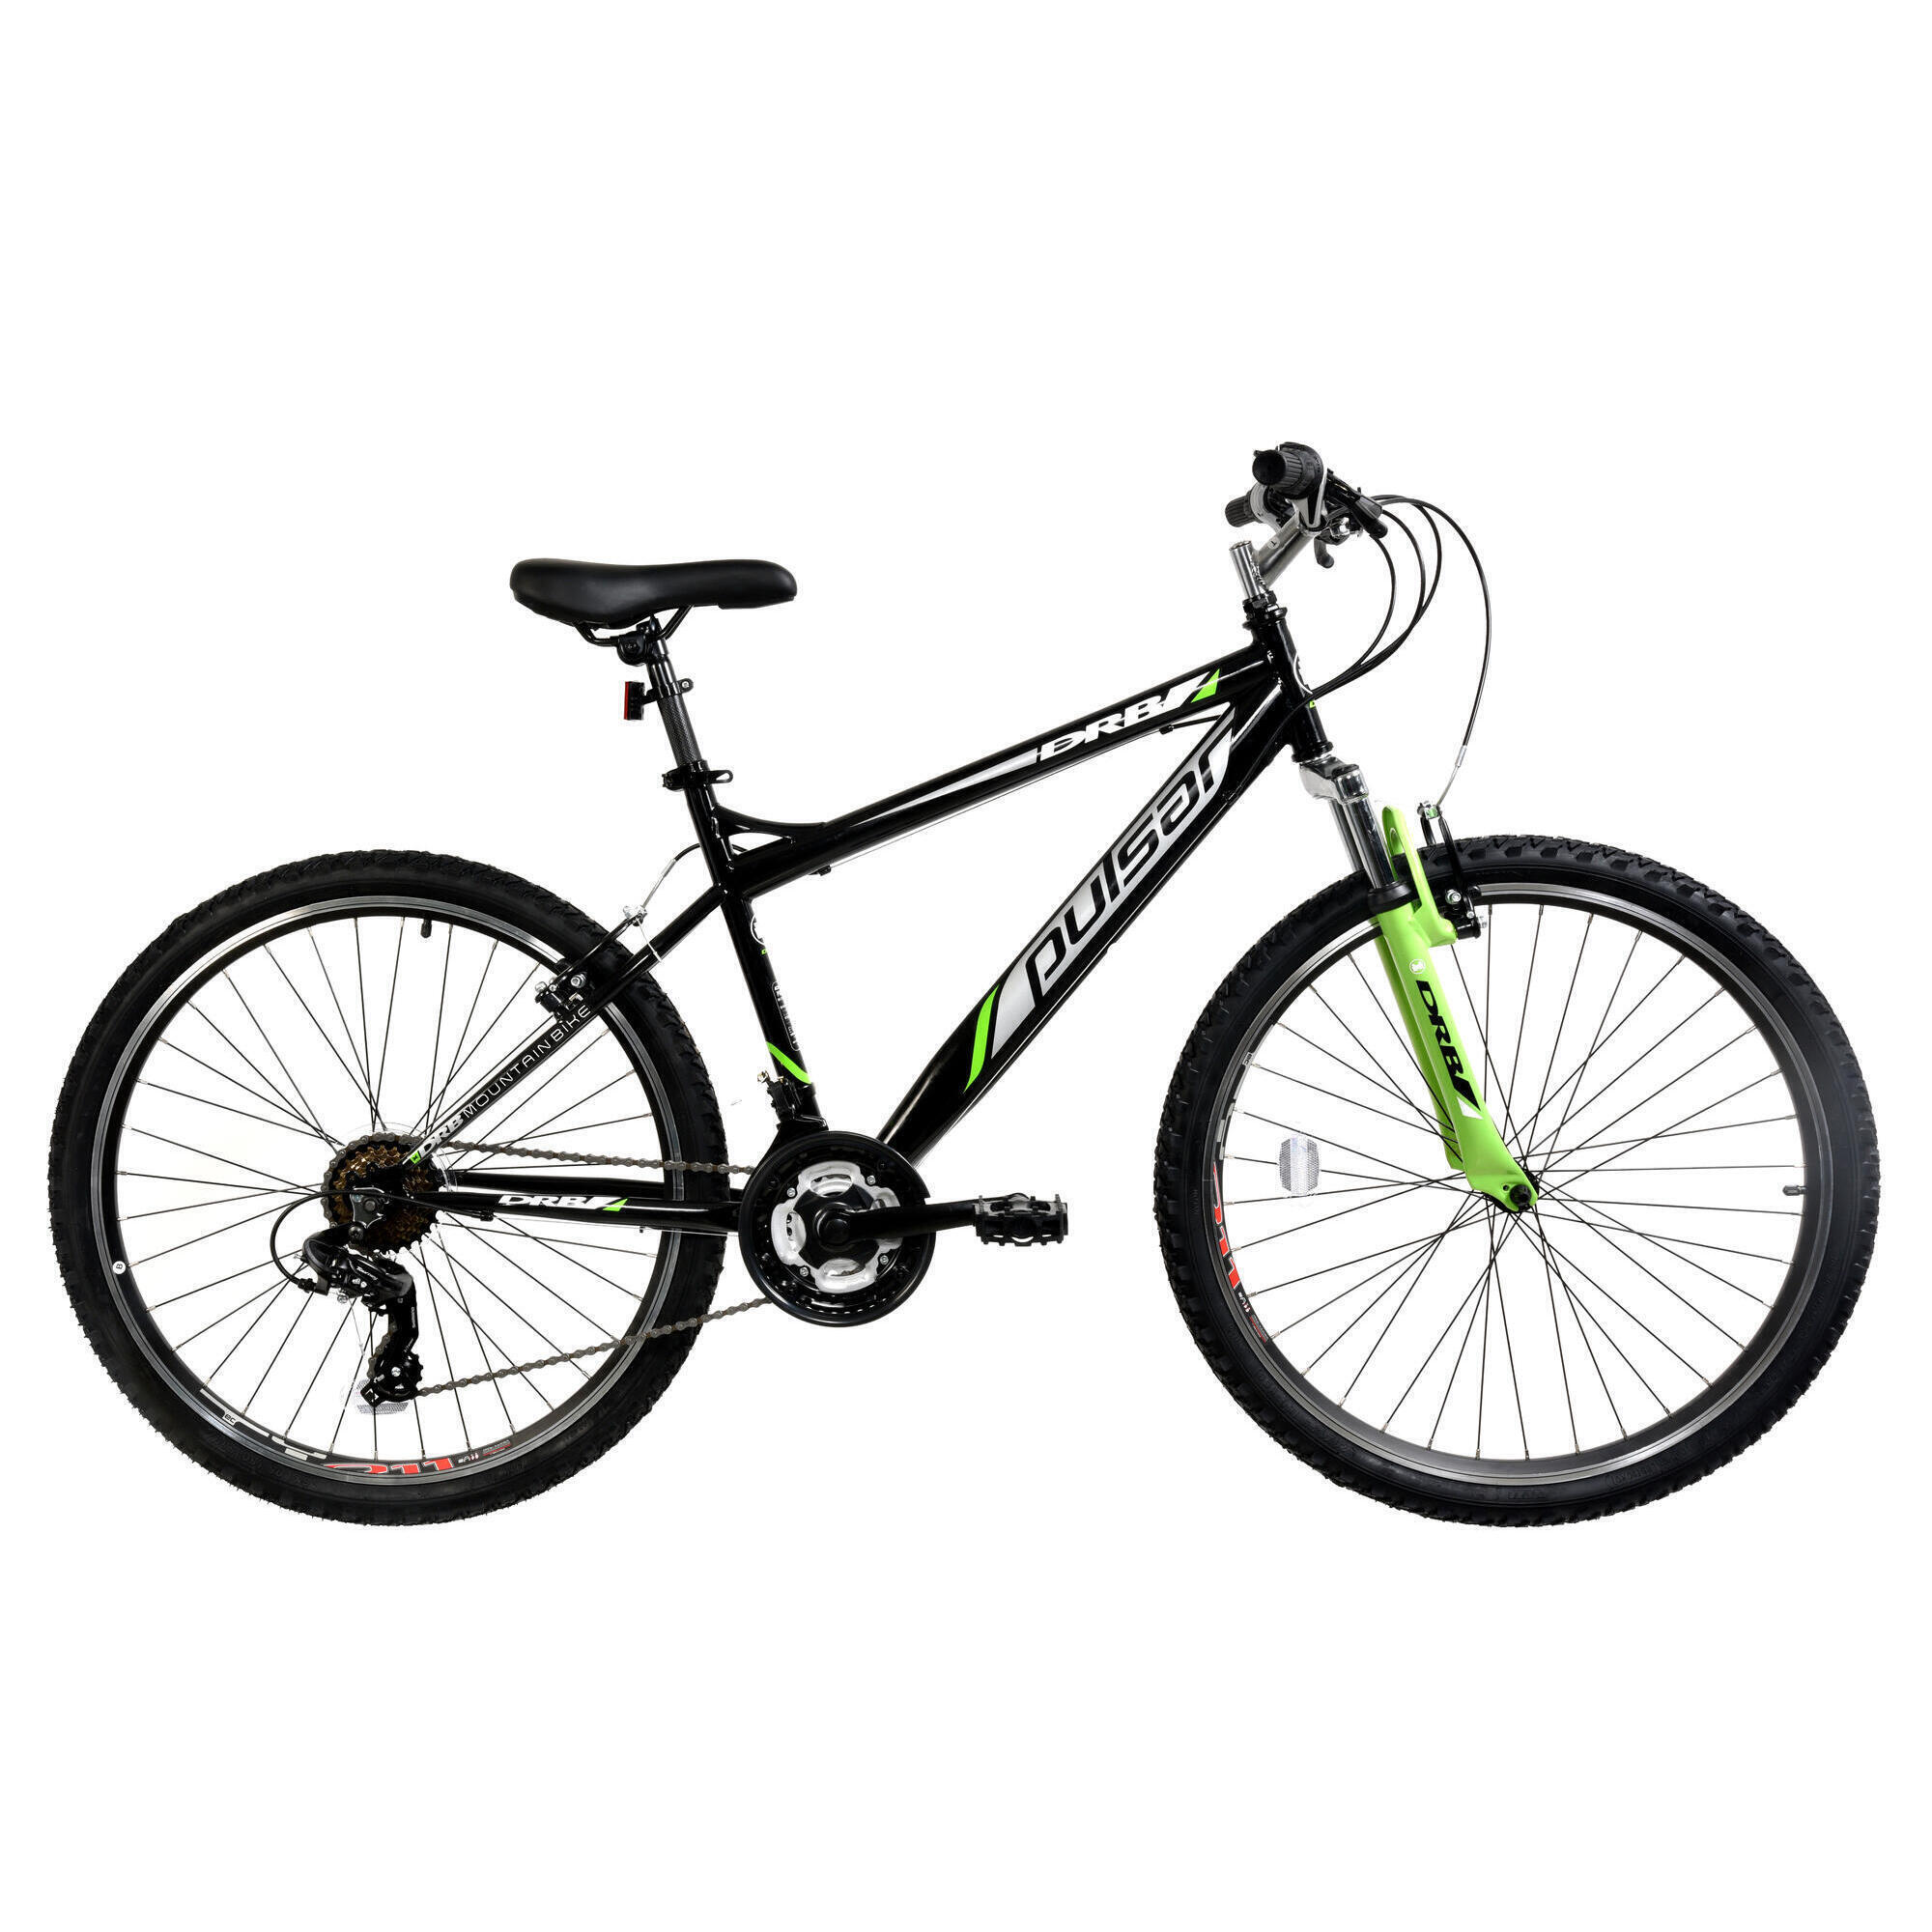 Dallingridge Pulsar Adult's Hardtail Mountain Bike, 26In Wheel - Black/Green 1/5